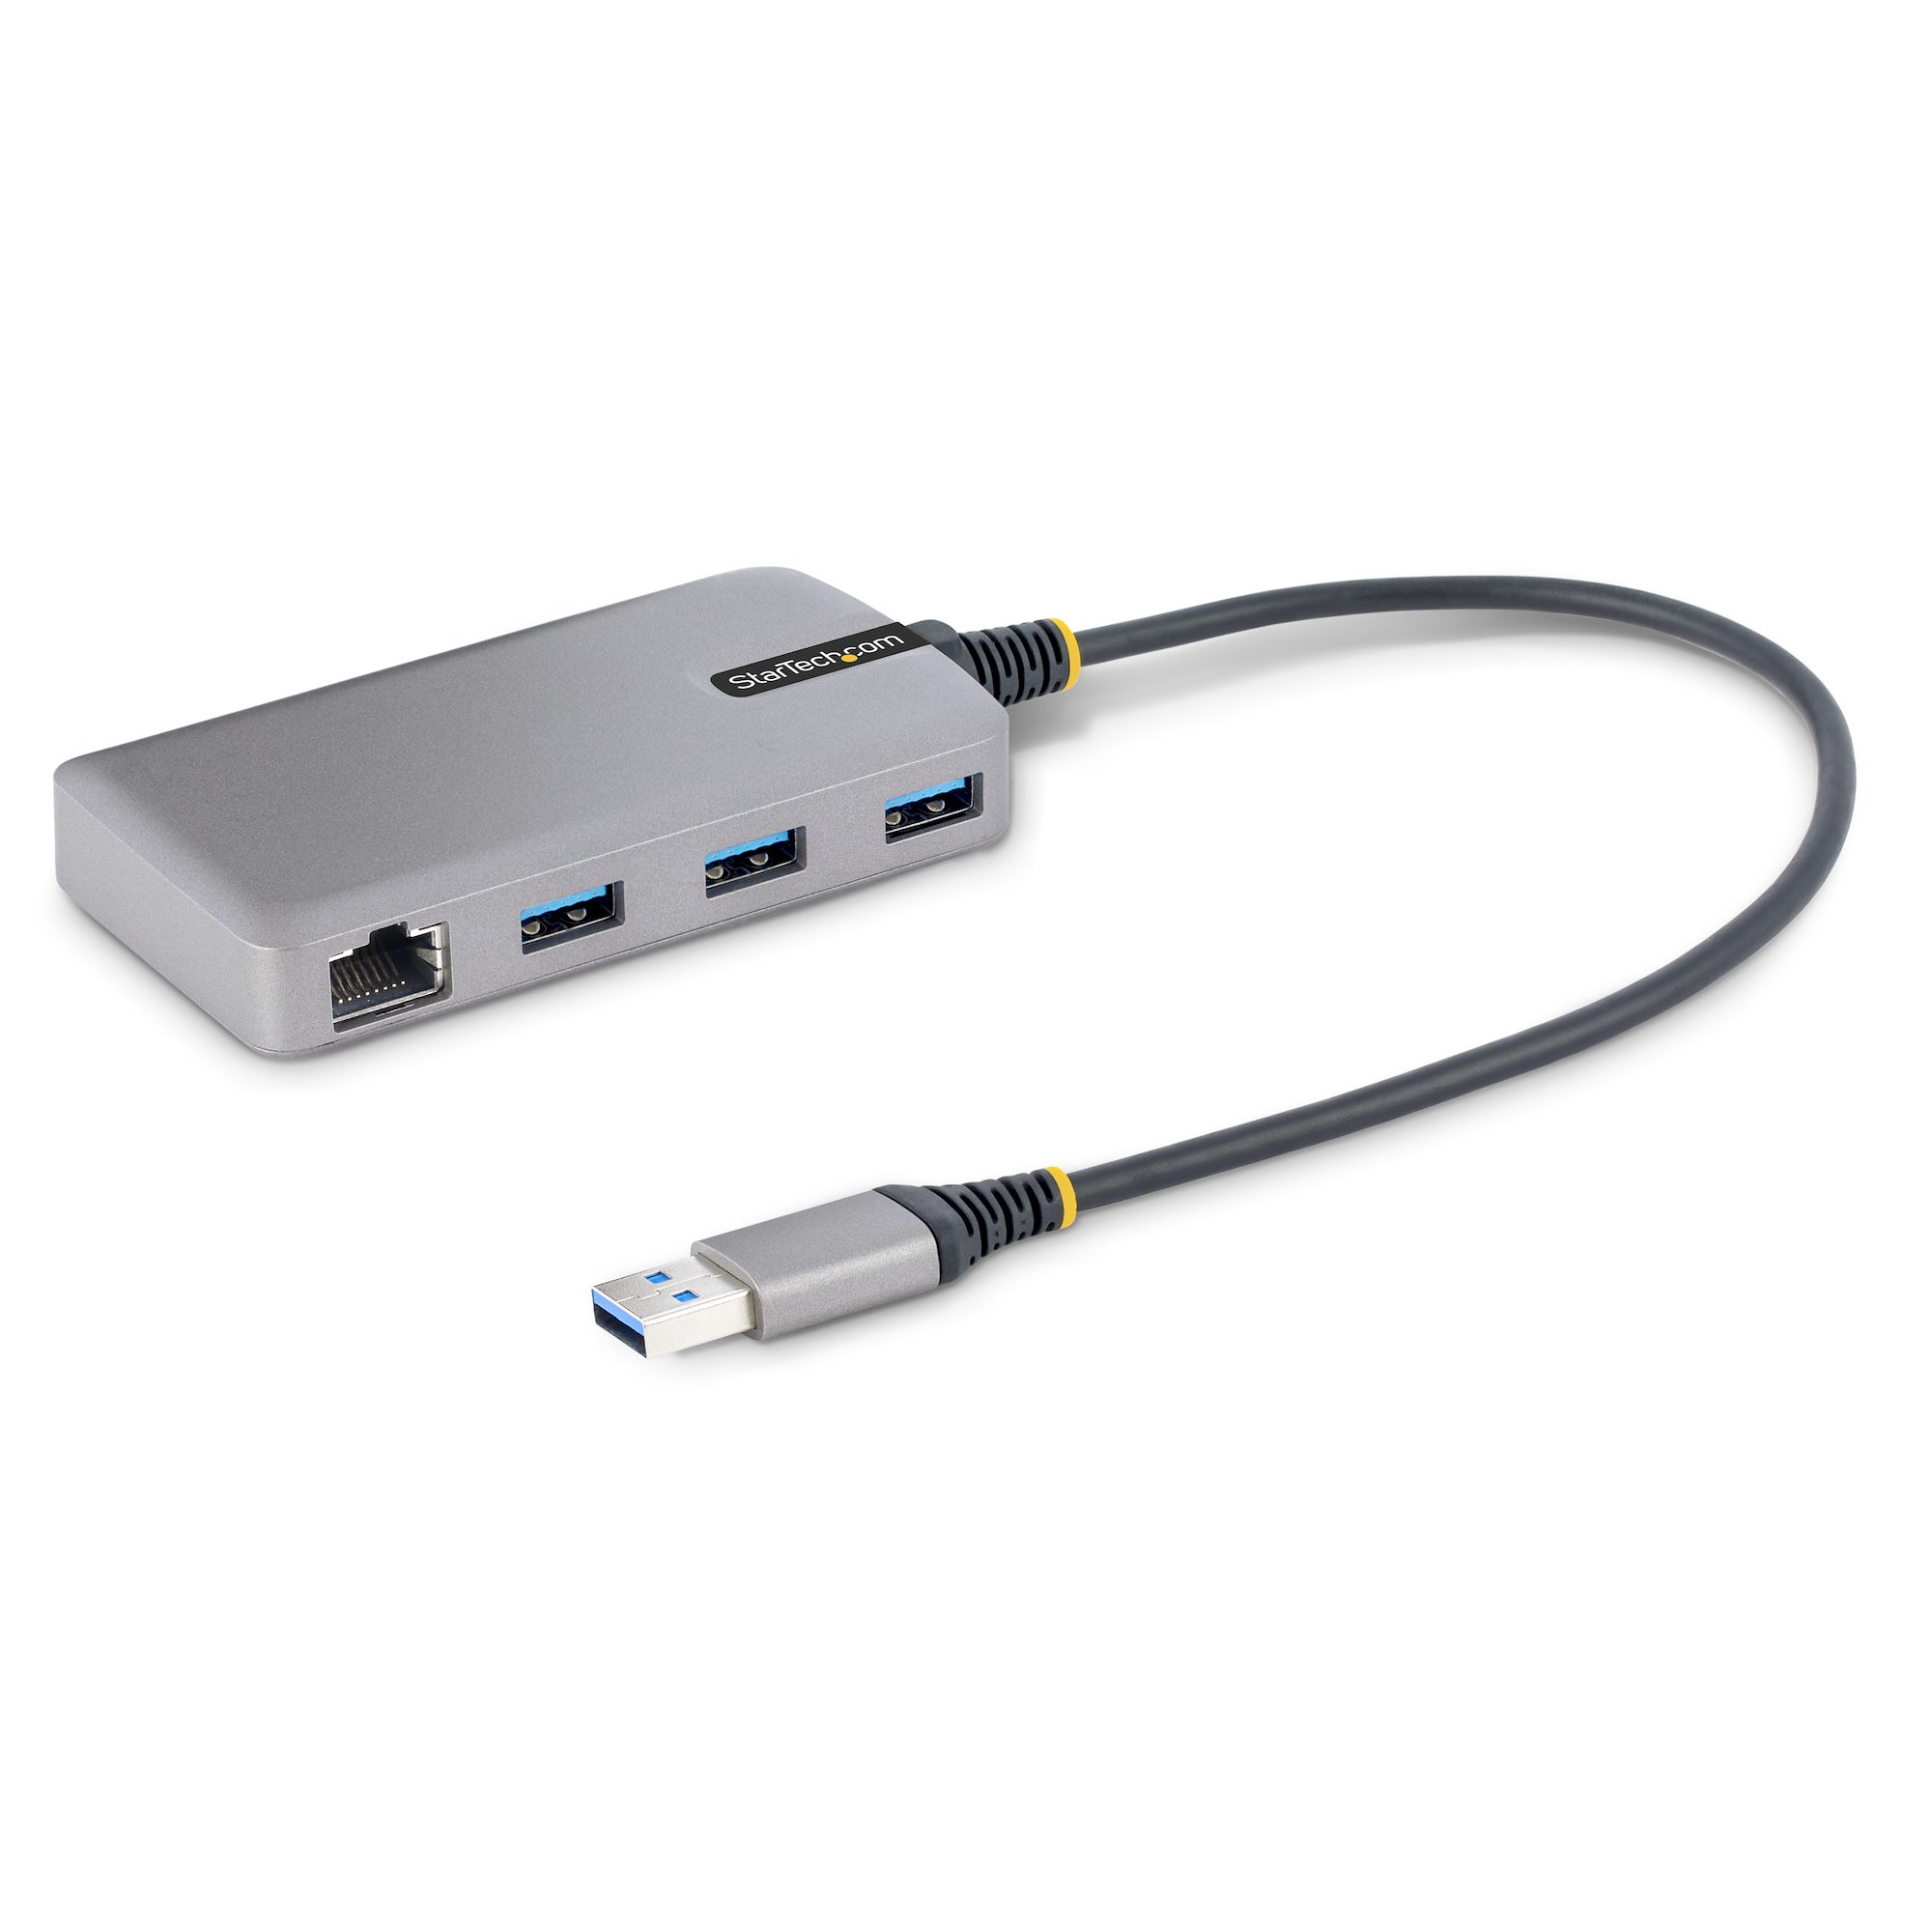 【5G3AGBB-USB-A-HUB】3-PORT USB HUB WITH ETHERNET, US